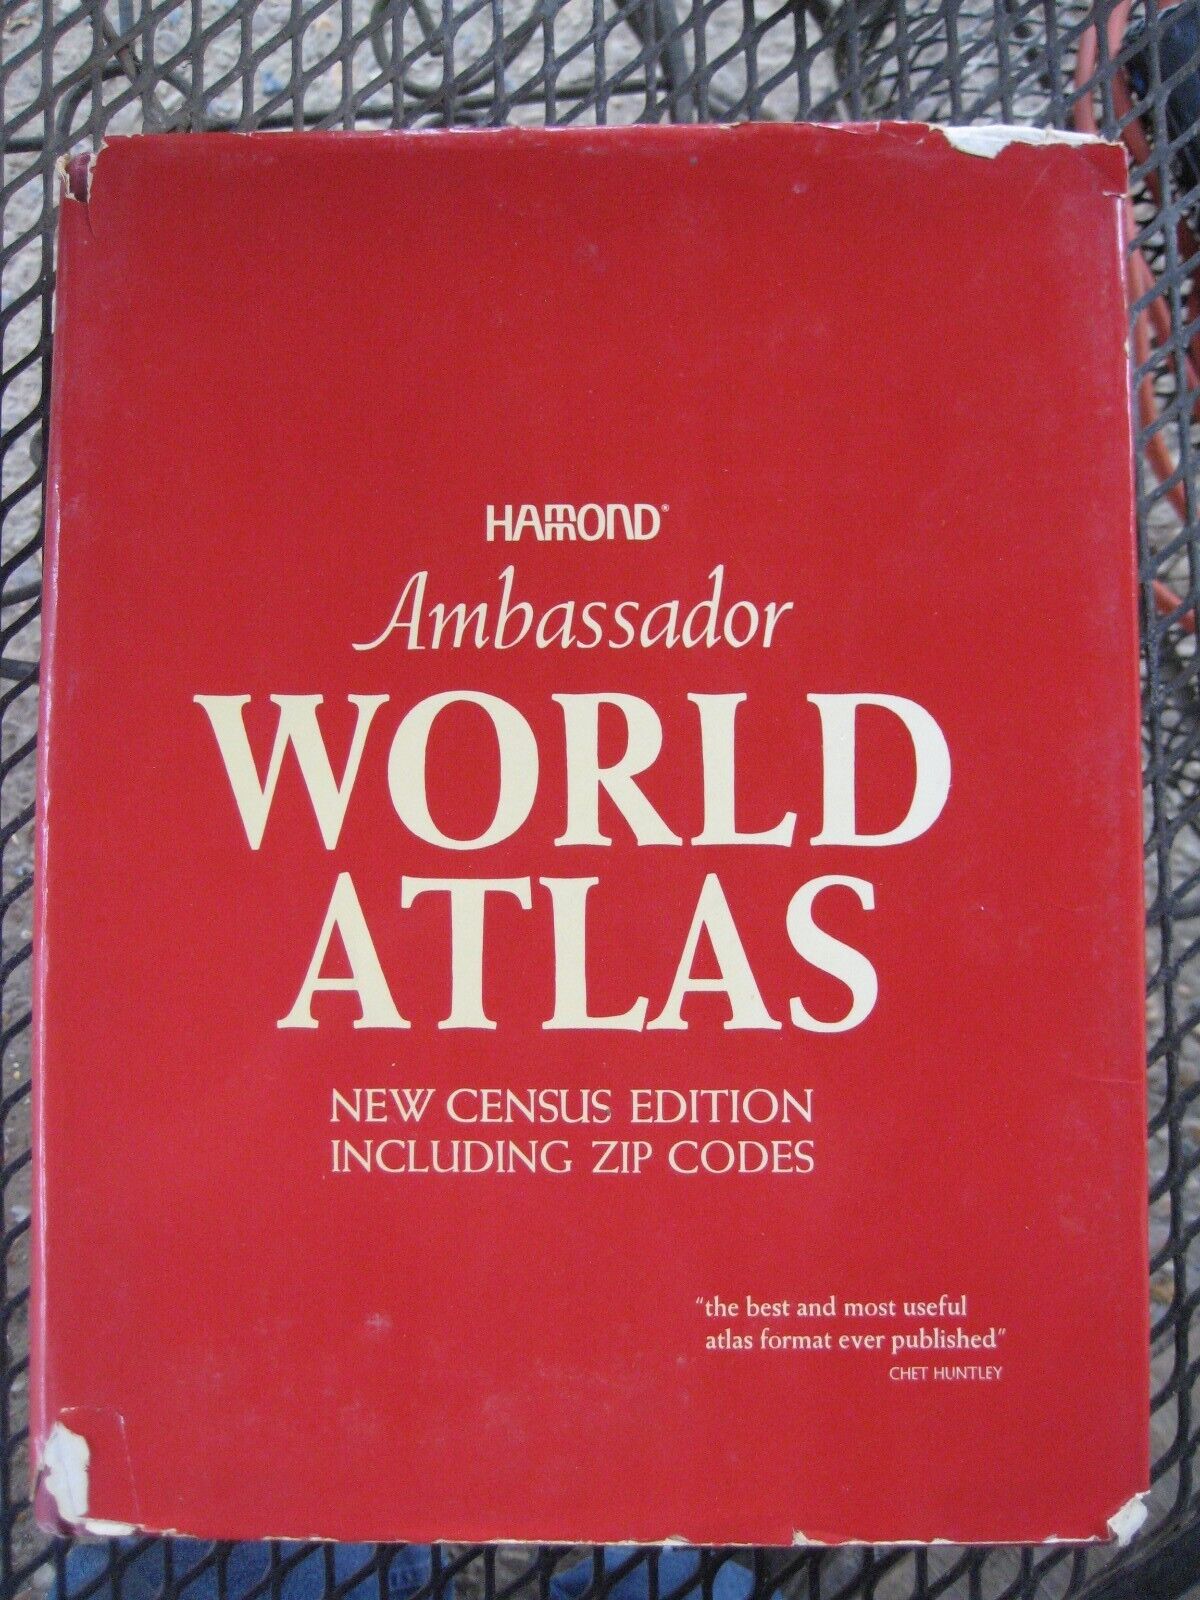 1974 Hammond Ambassador World Atlas in great condition